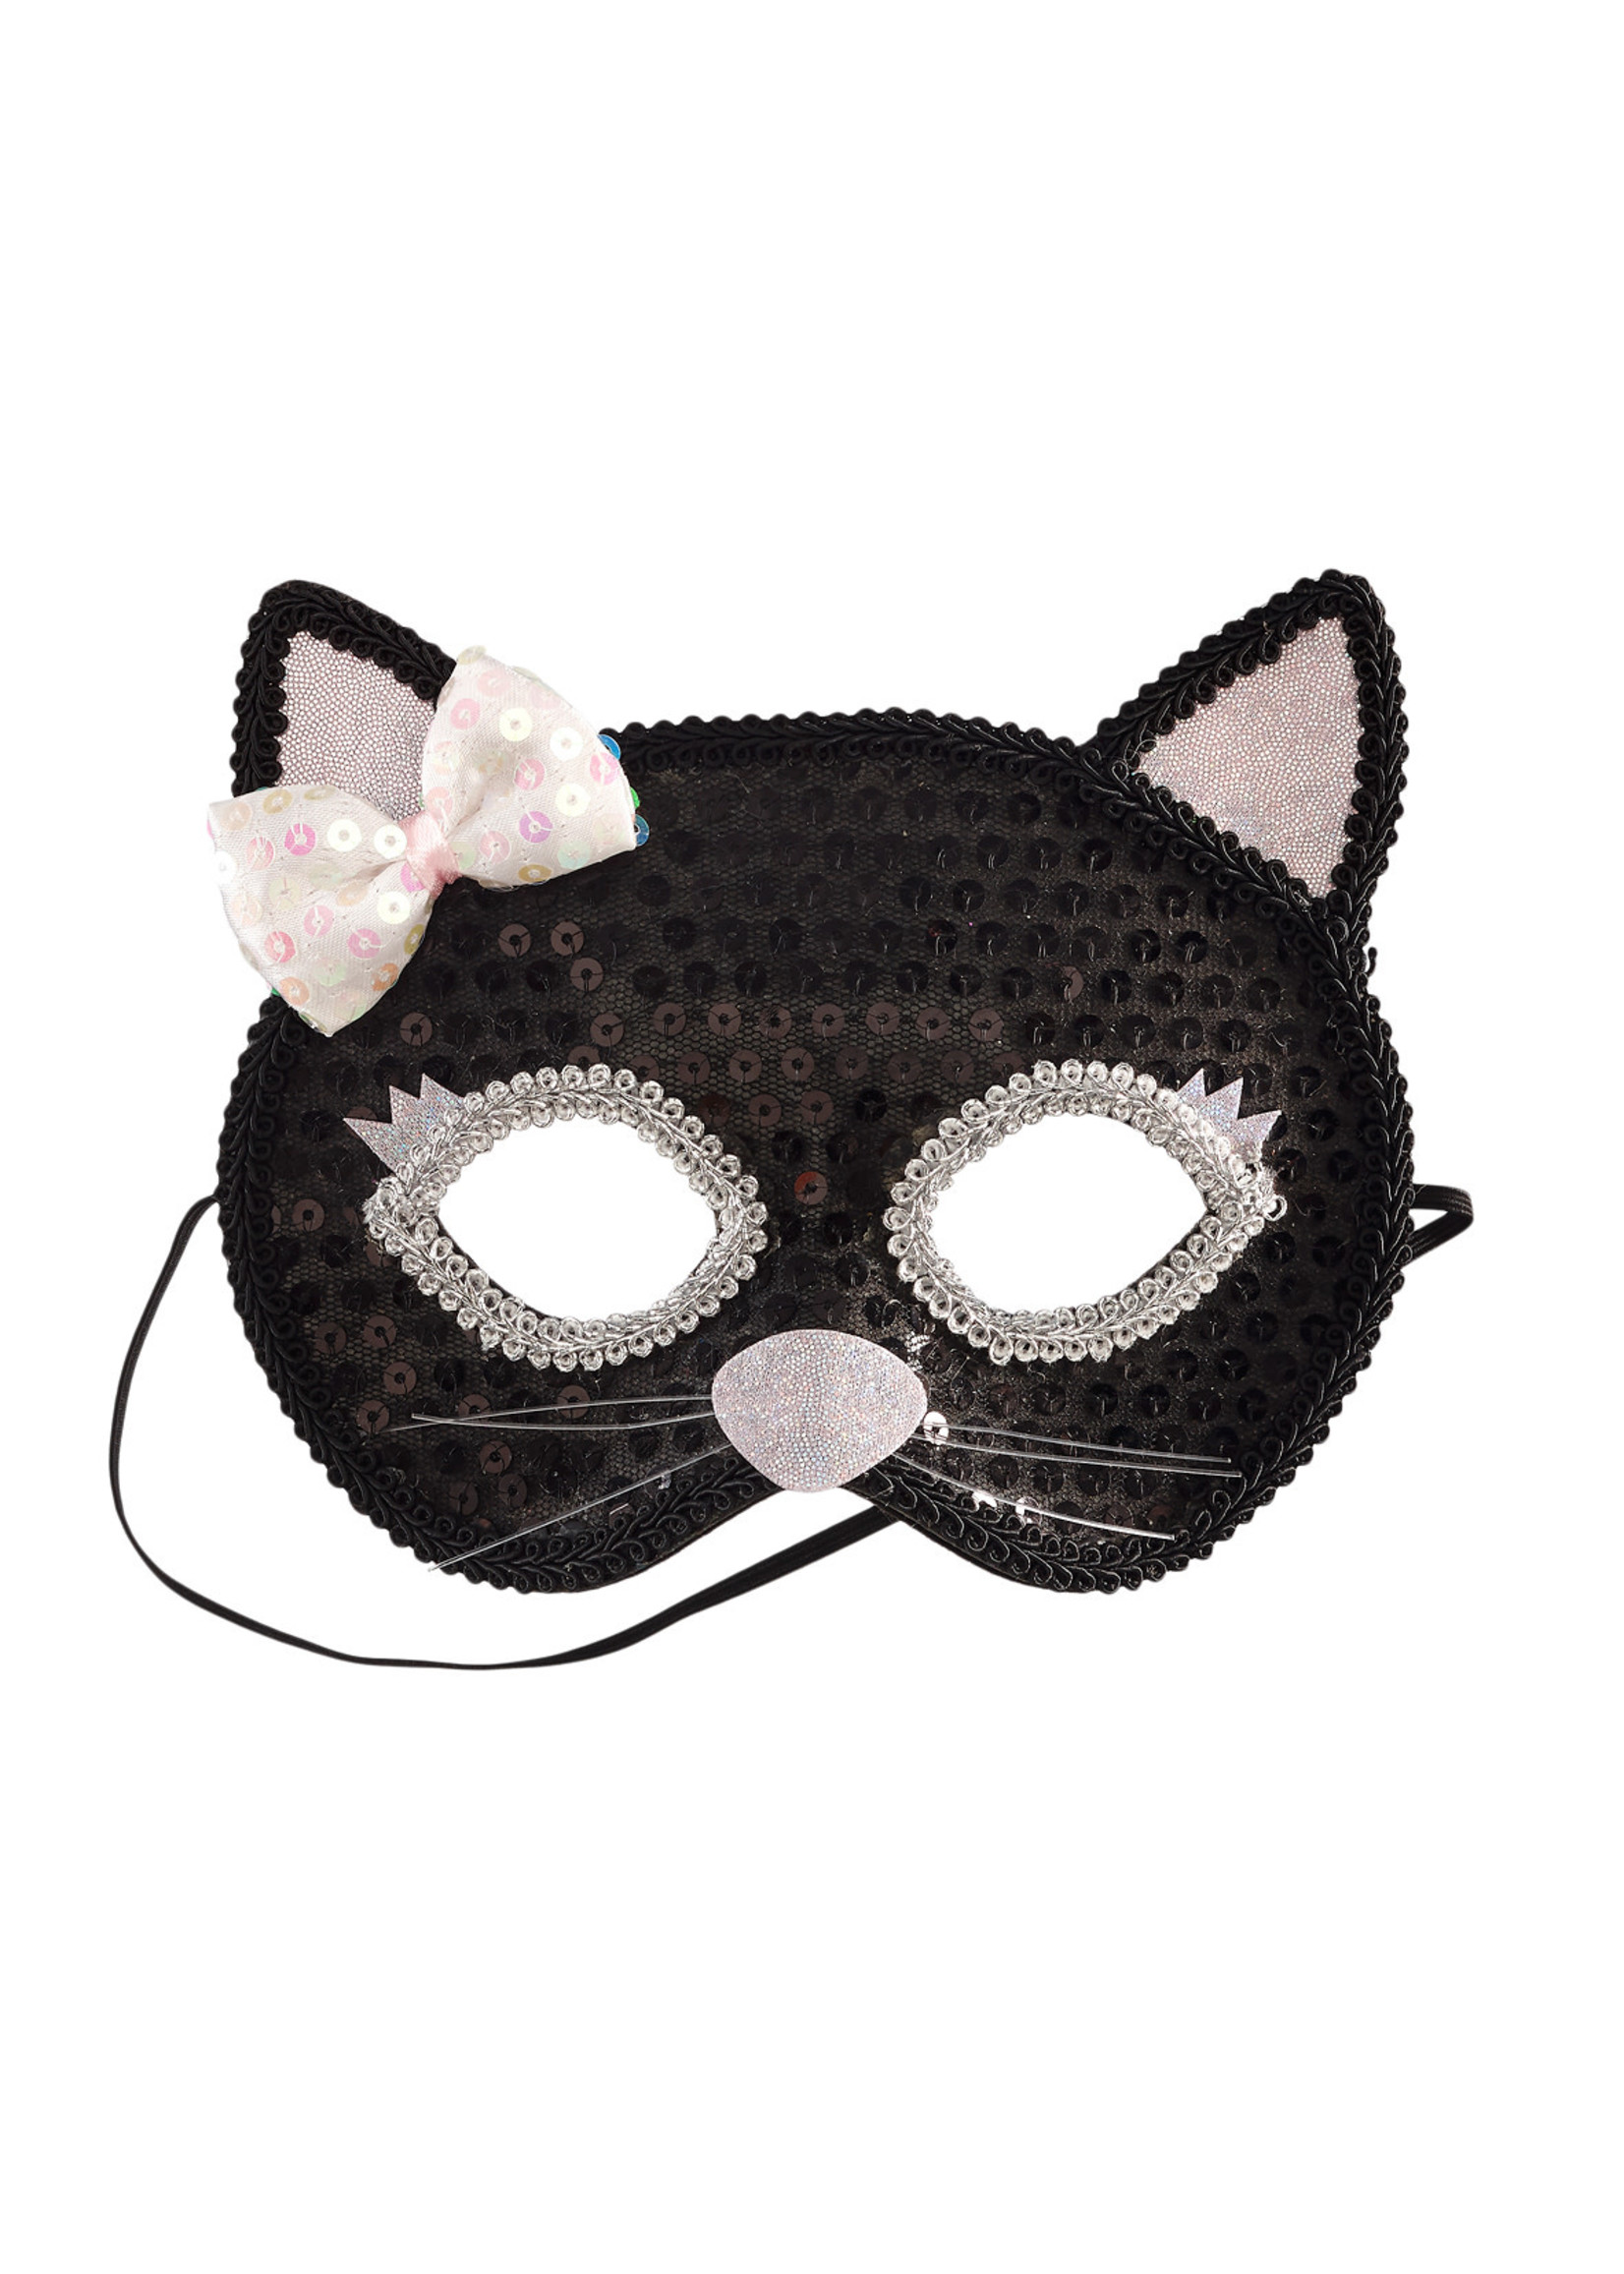 Subsidie De Alpen Snazzy Souza Mask Kitty Kat - Souza -